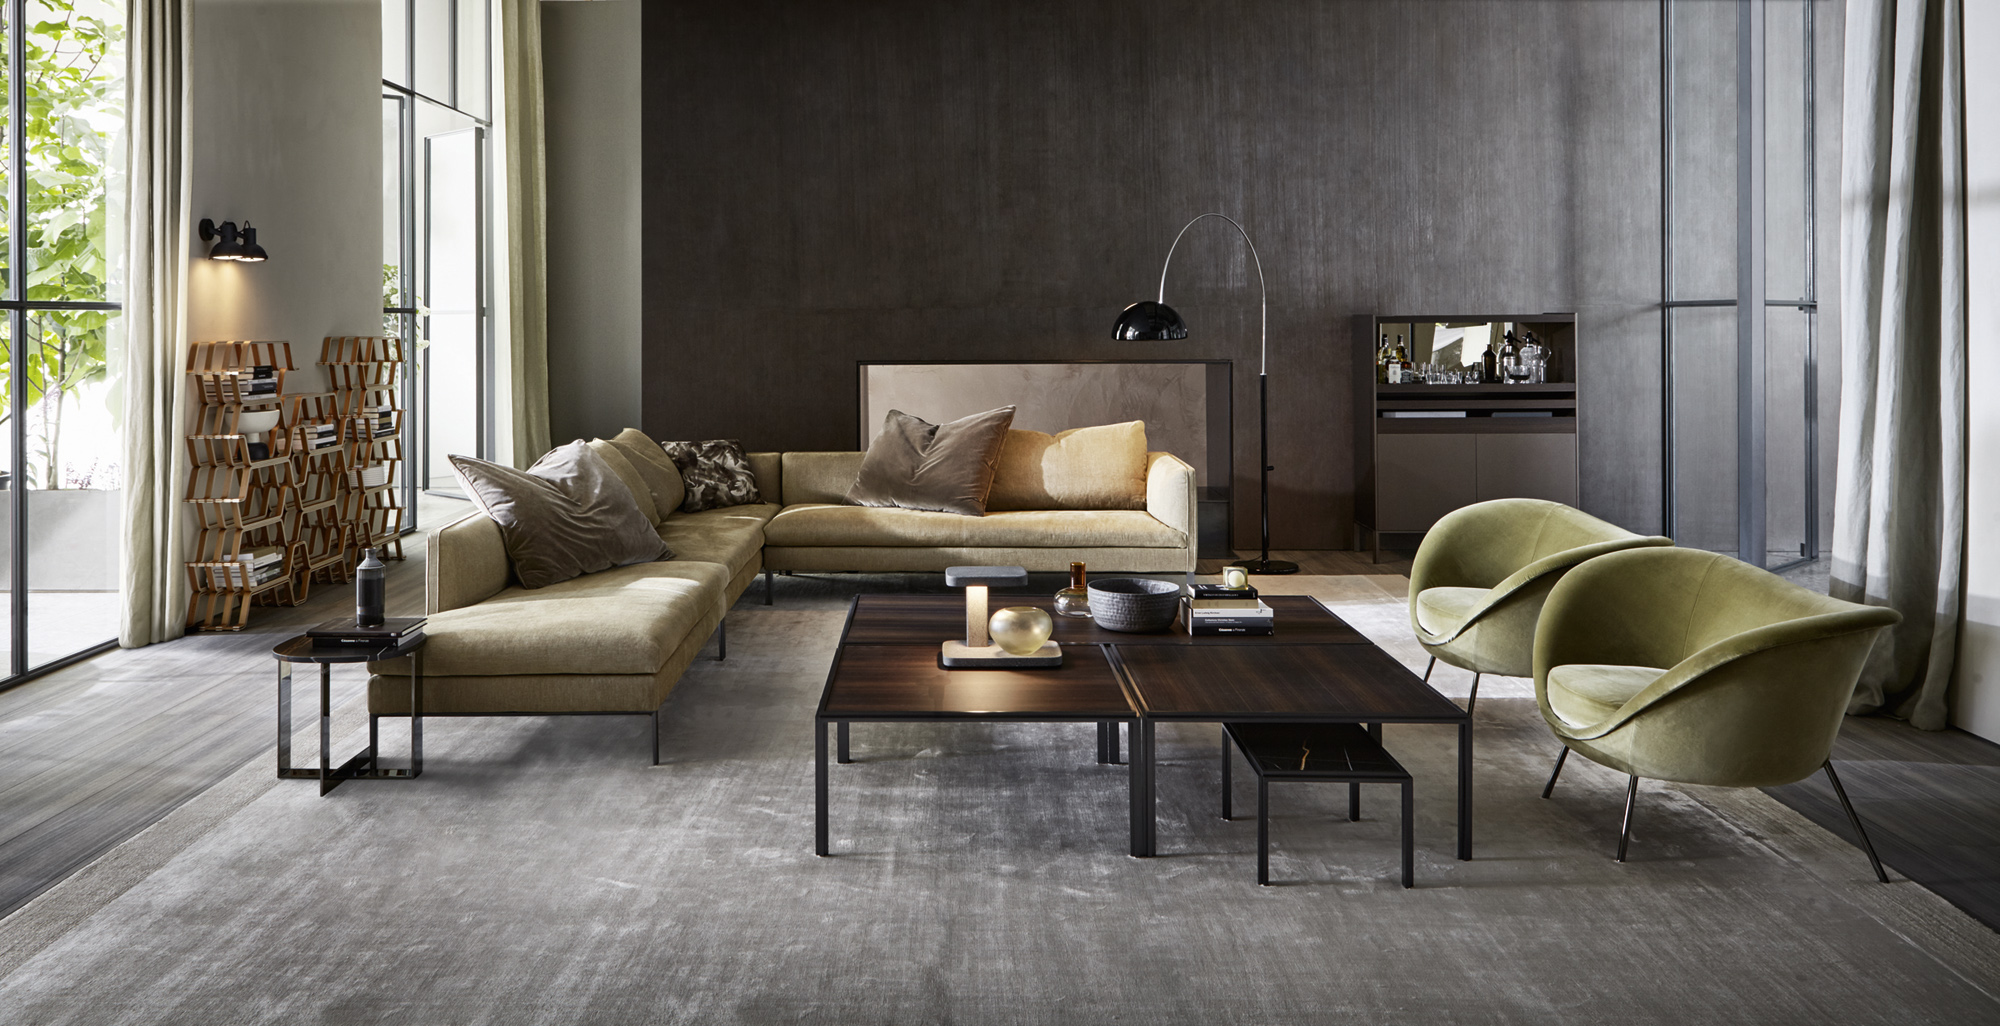 Paul sofa, Jan small table, Quinten sideborad, design Vincent Van Duysen